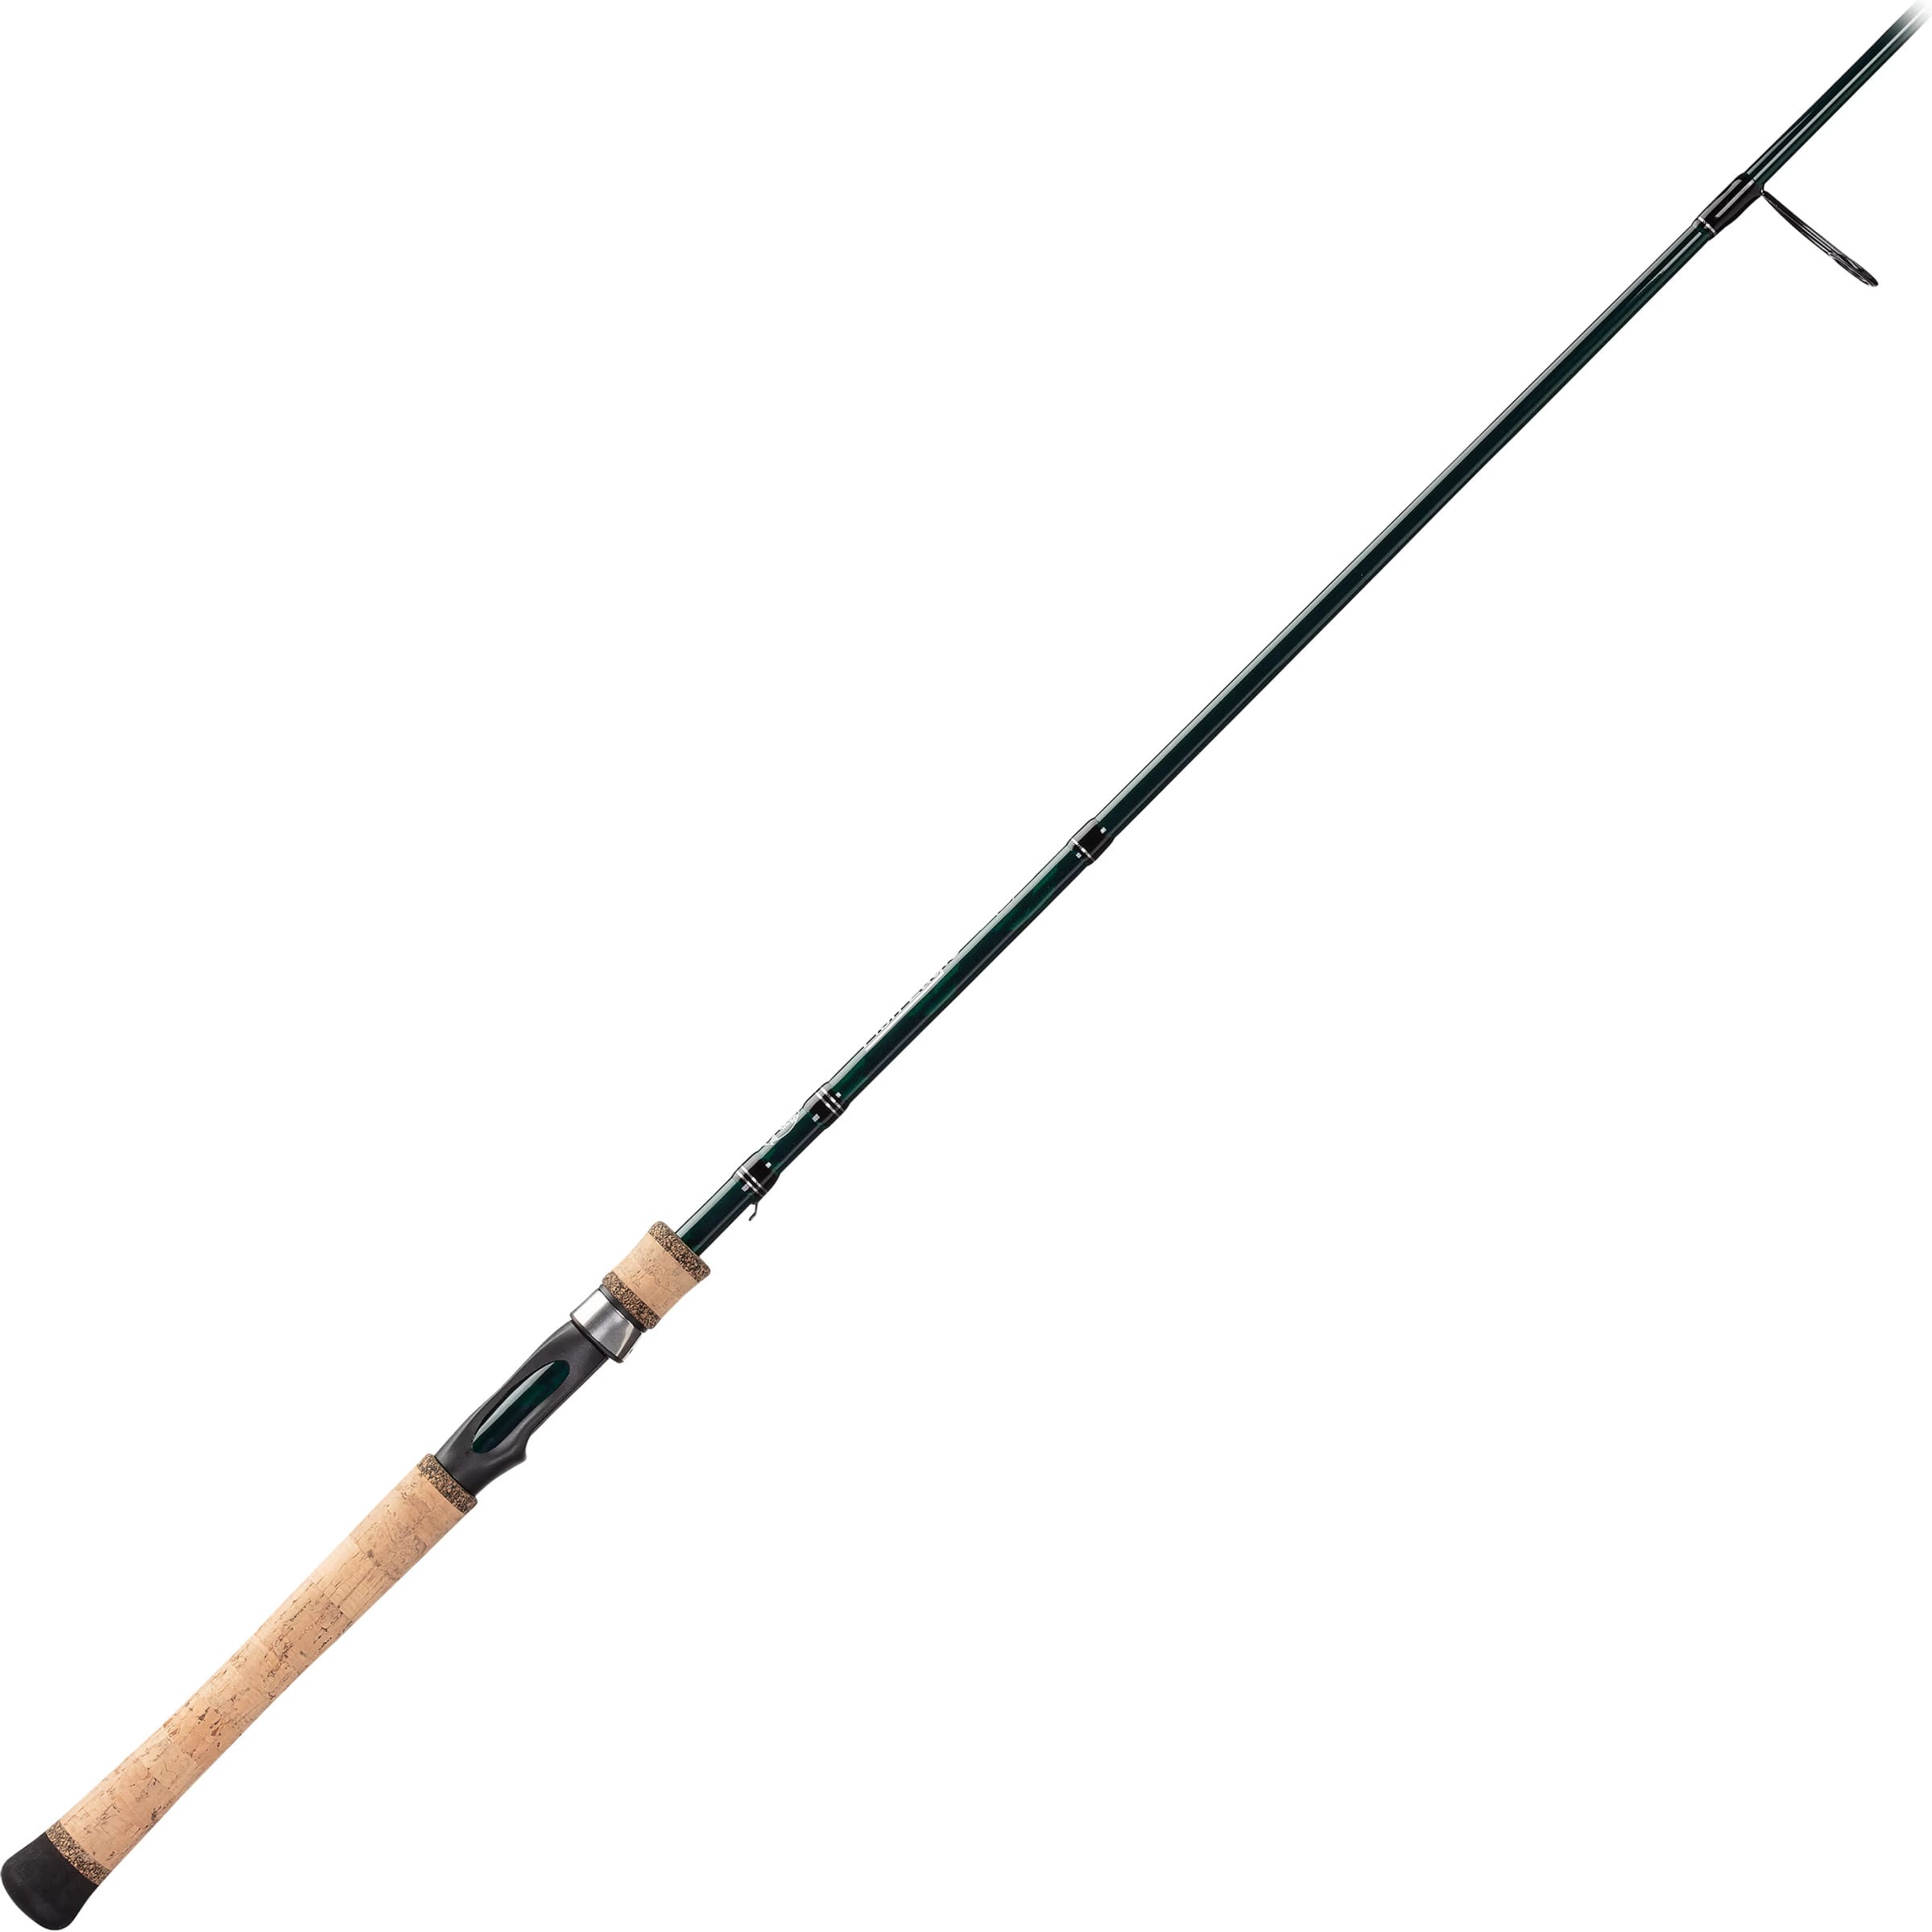 CABELA'S FISH EAGLE II CX2 7' Graphite Casting Rod $30.00 - PicClick